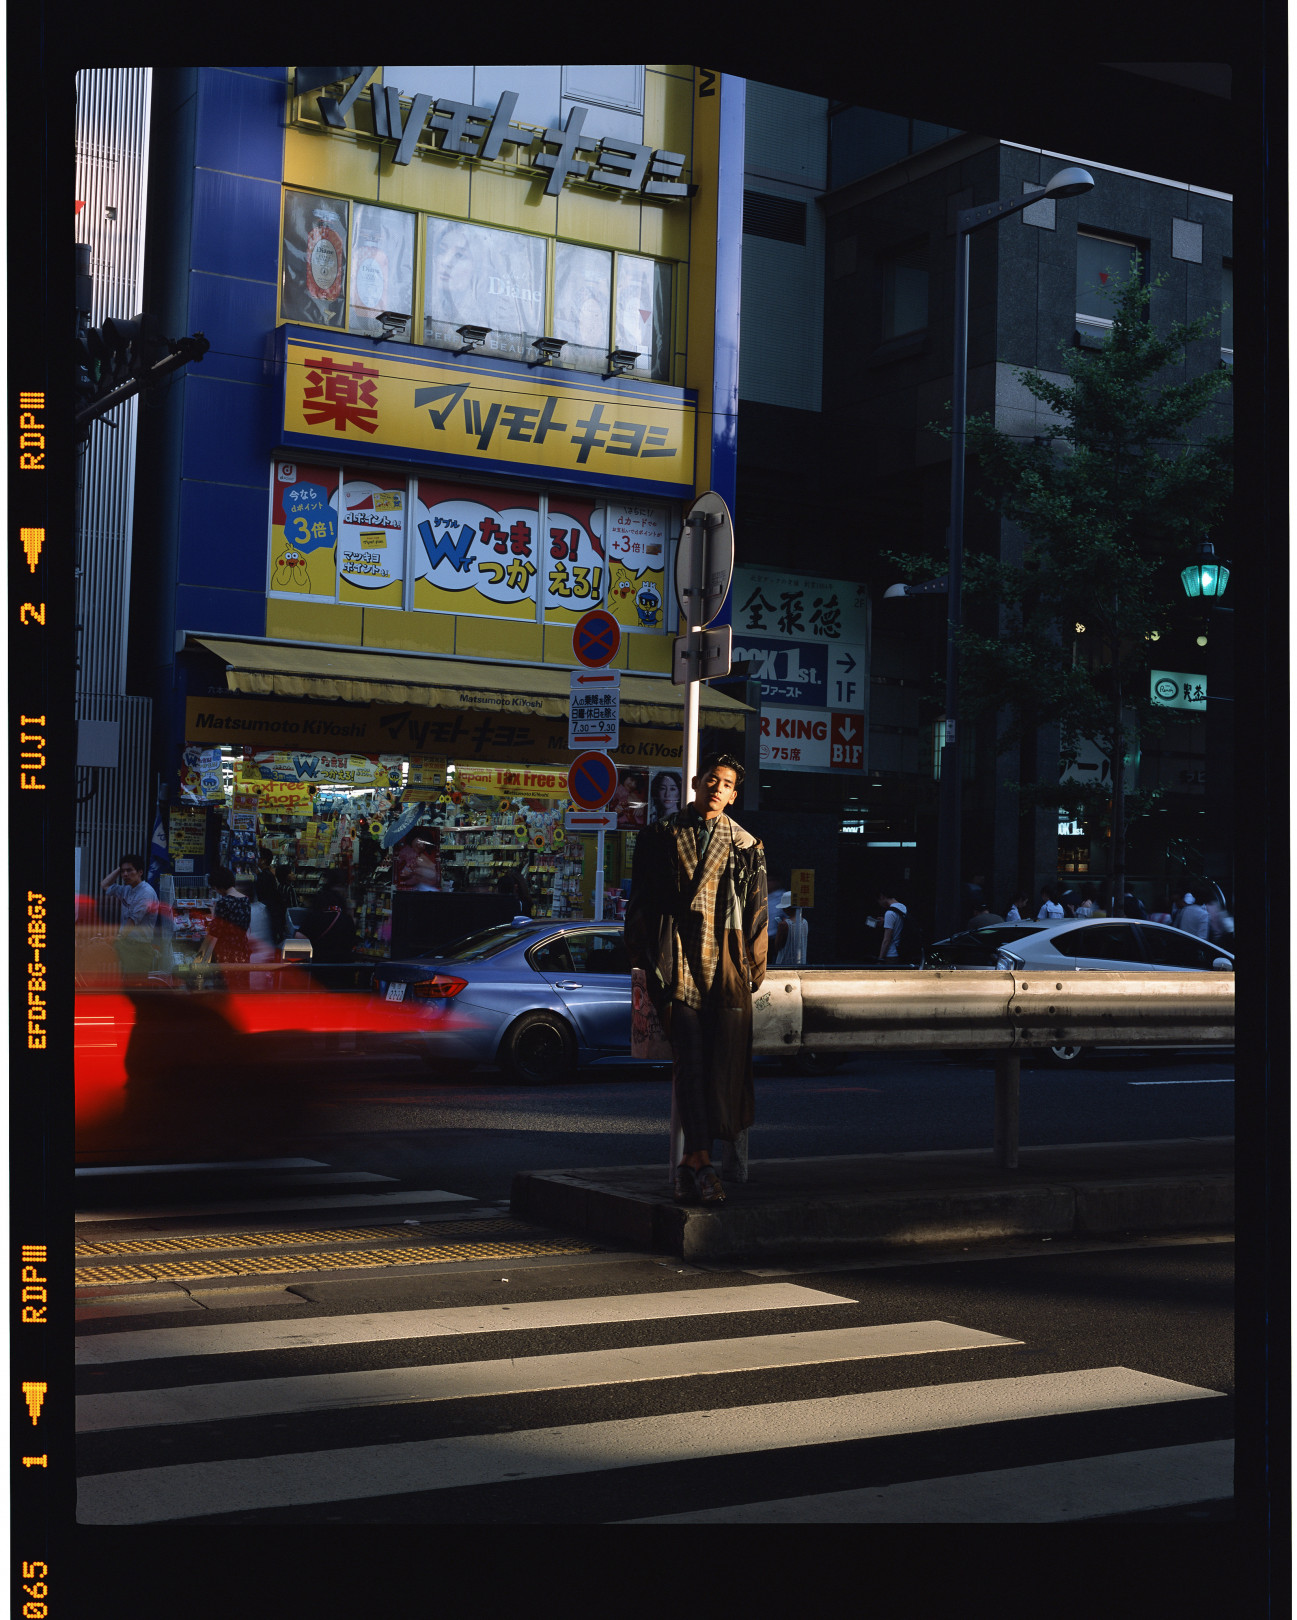 鈴木親  Roppongi, Tokyo  2018  C-print  126.0 x 100.0 cm